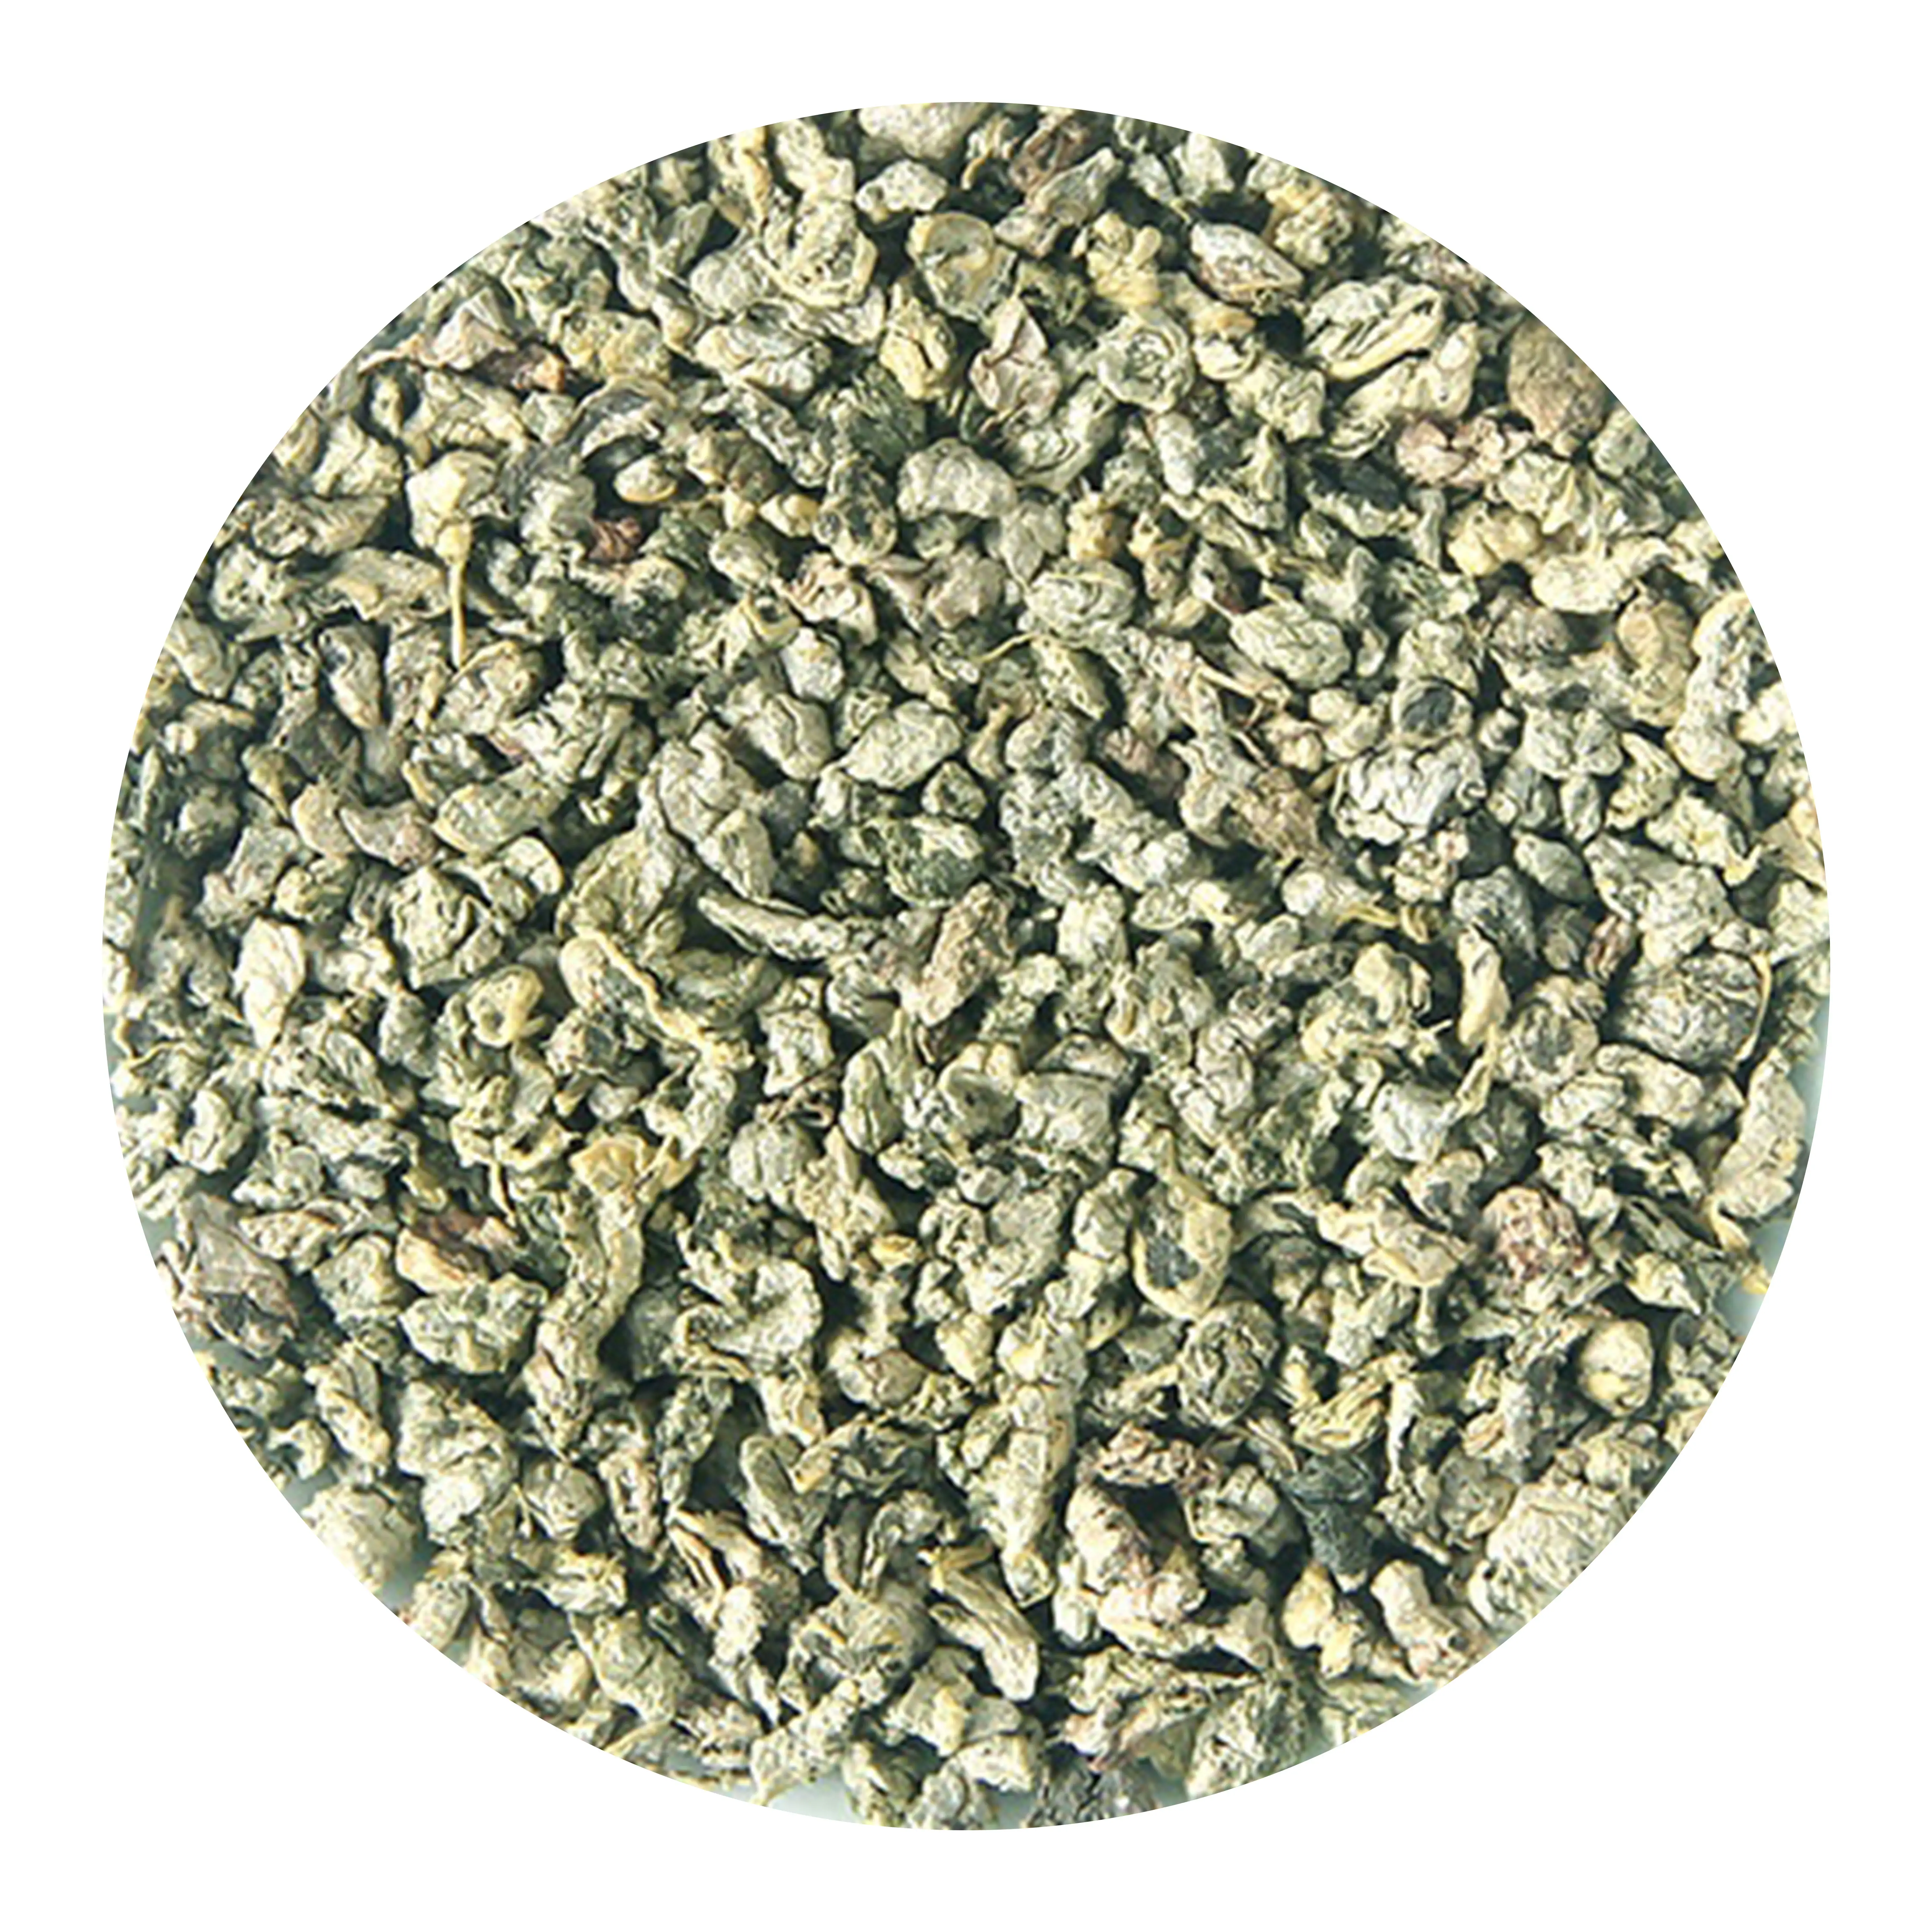 Wholesale high quality Refreshing Good Taste Well-dried Lotus leaf tea